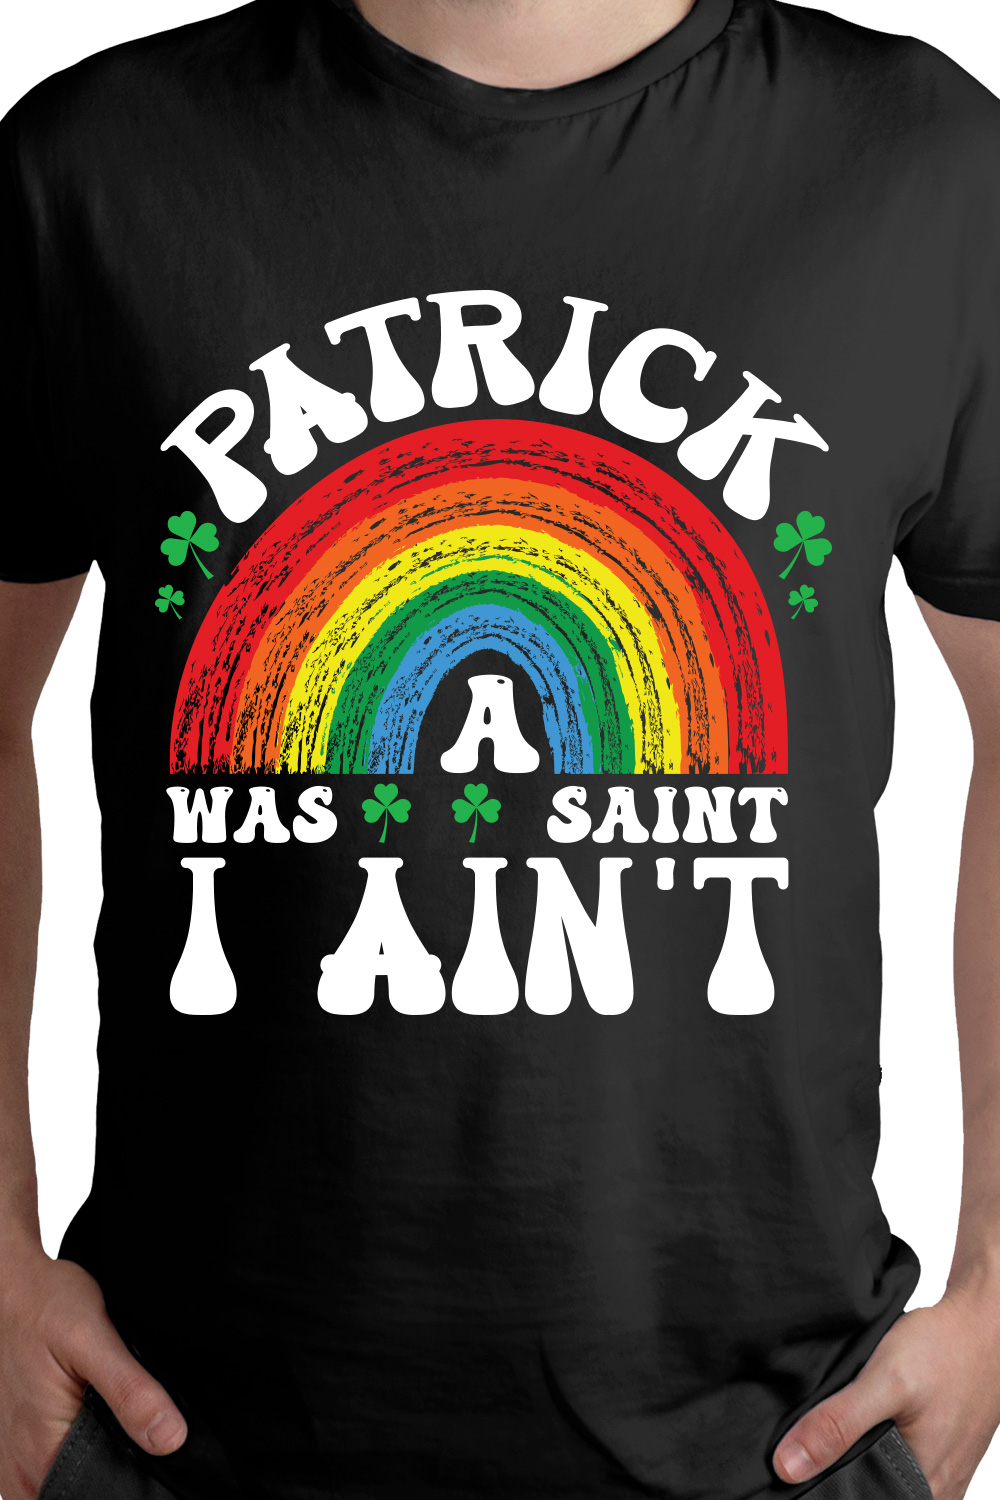 Patrick was a saint i ain’t St Patricks Day Art Print pinterest preview image.